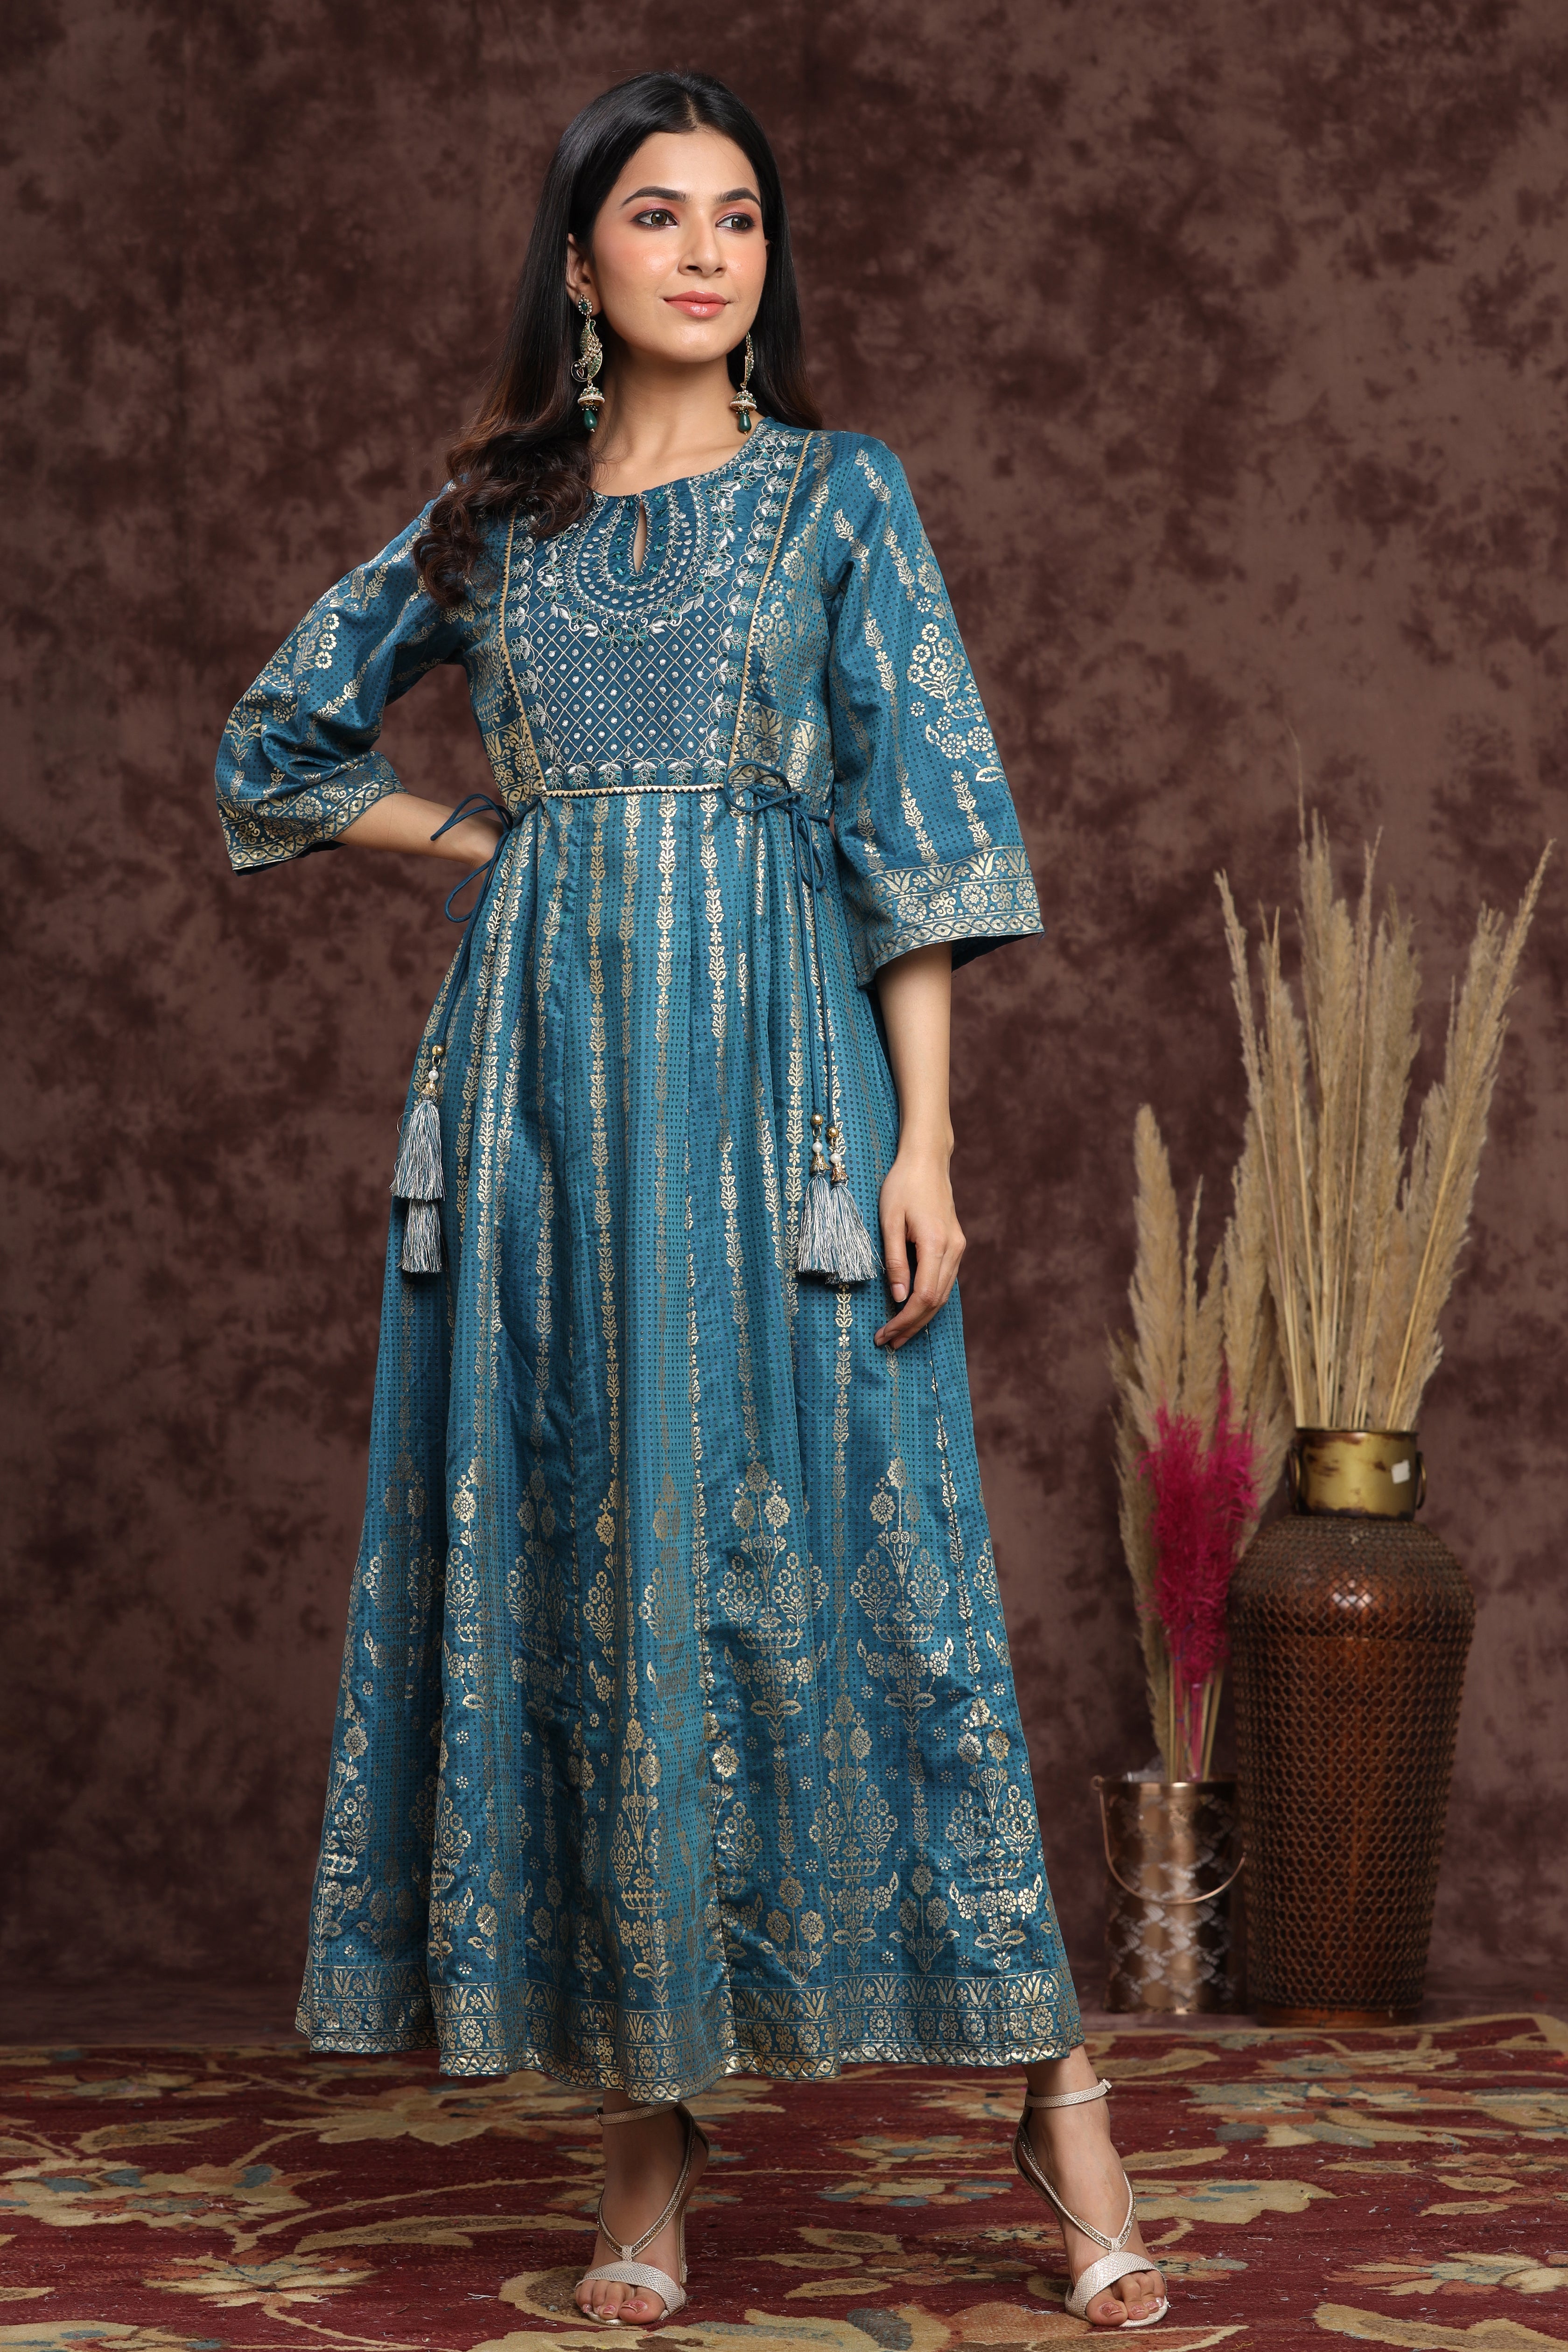 Juniper Teal Ethnic Motif Printed Shantoon Anarkali Dress.